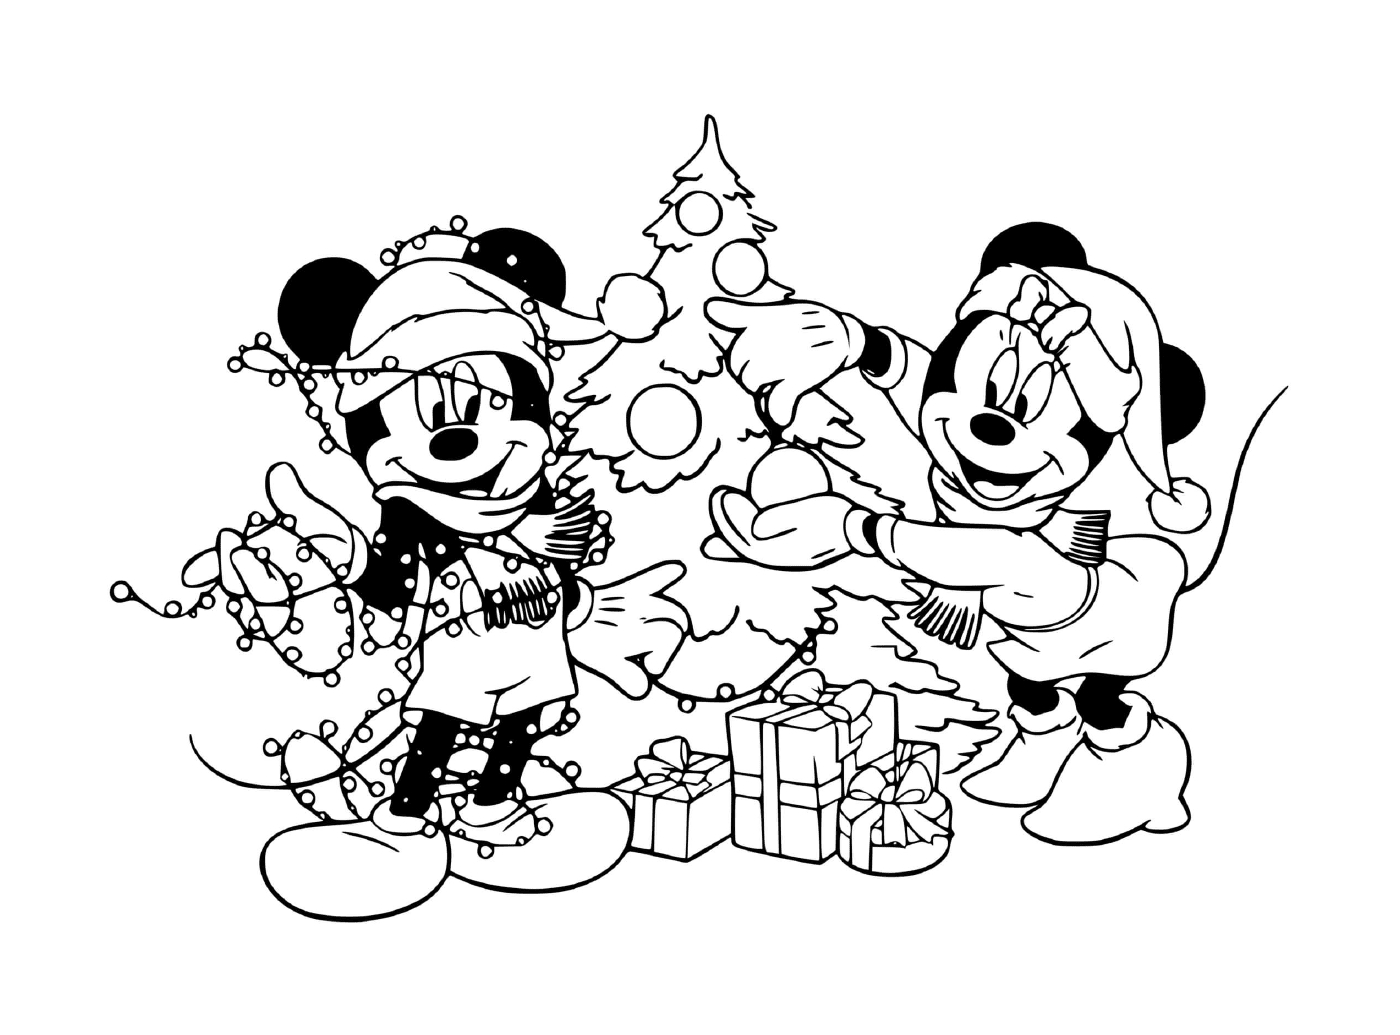   Mickey et Minnie décorent 